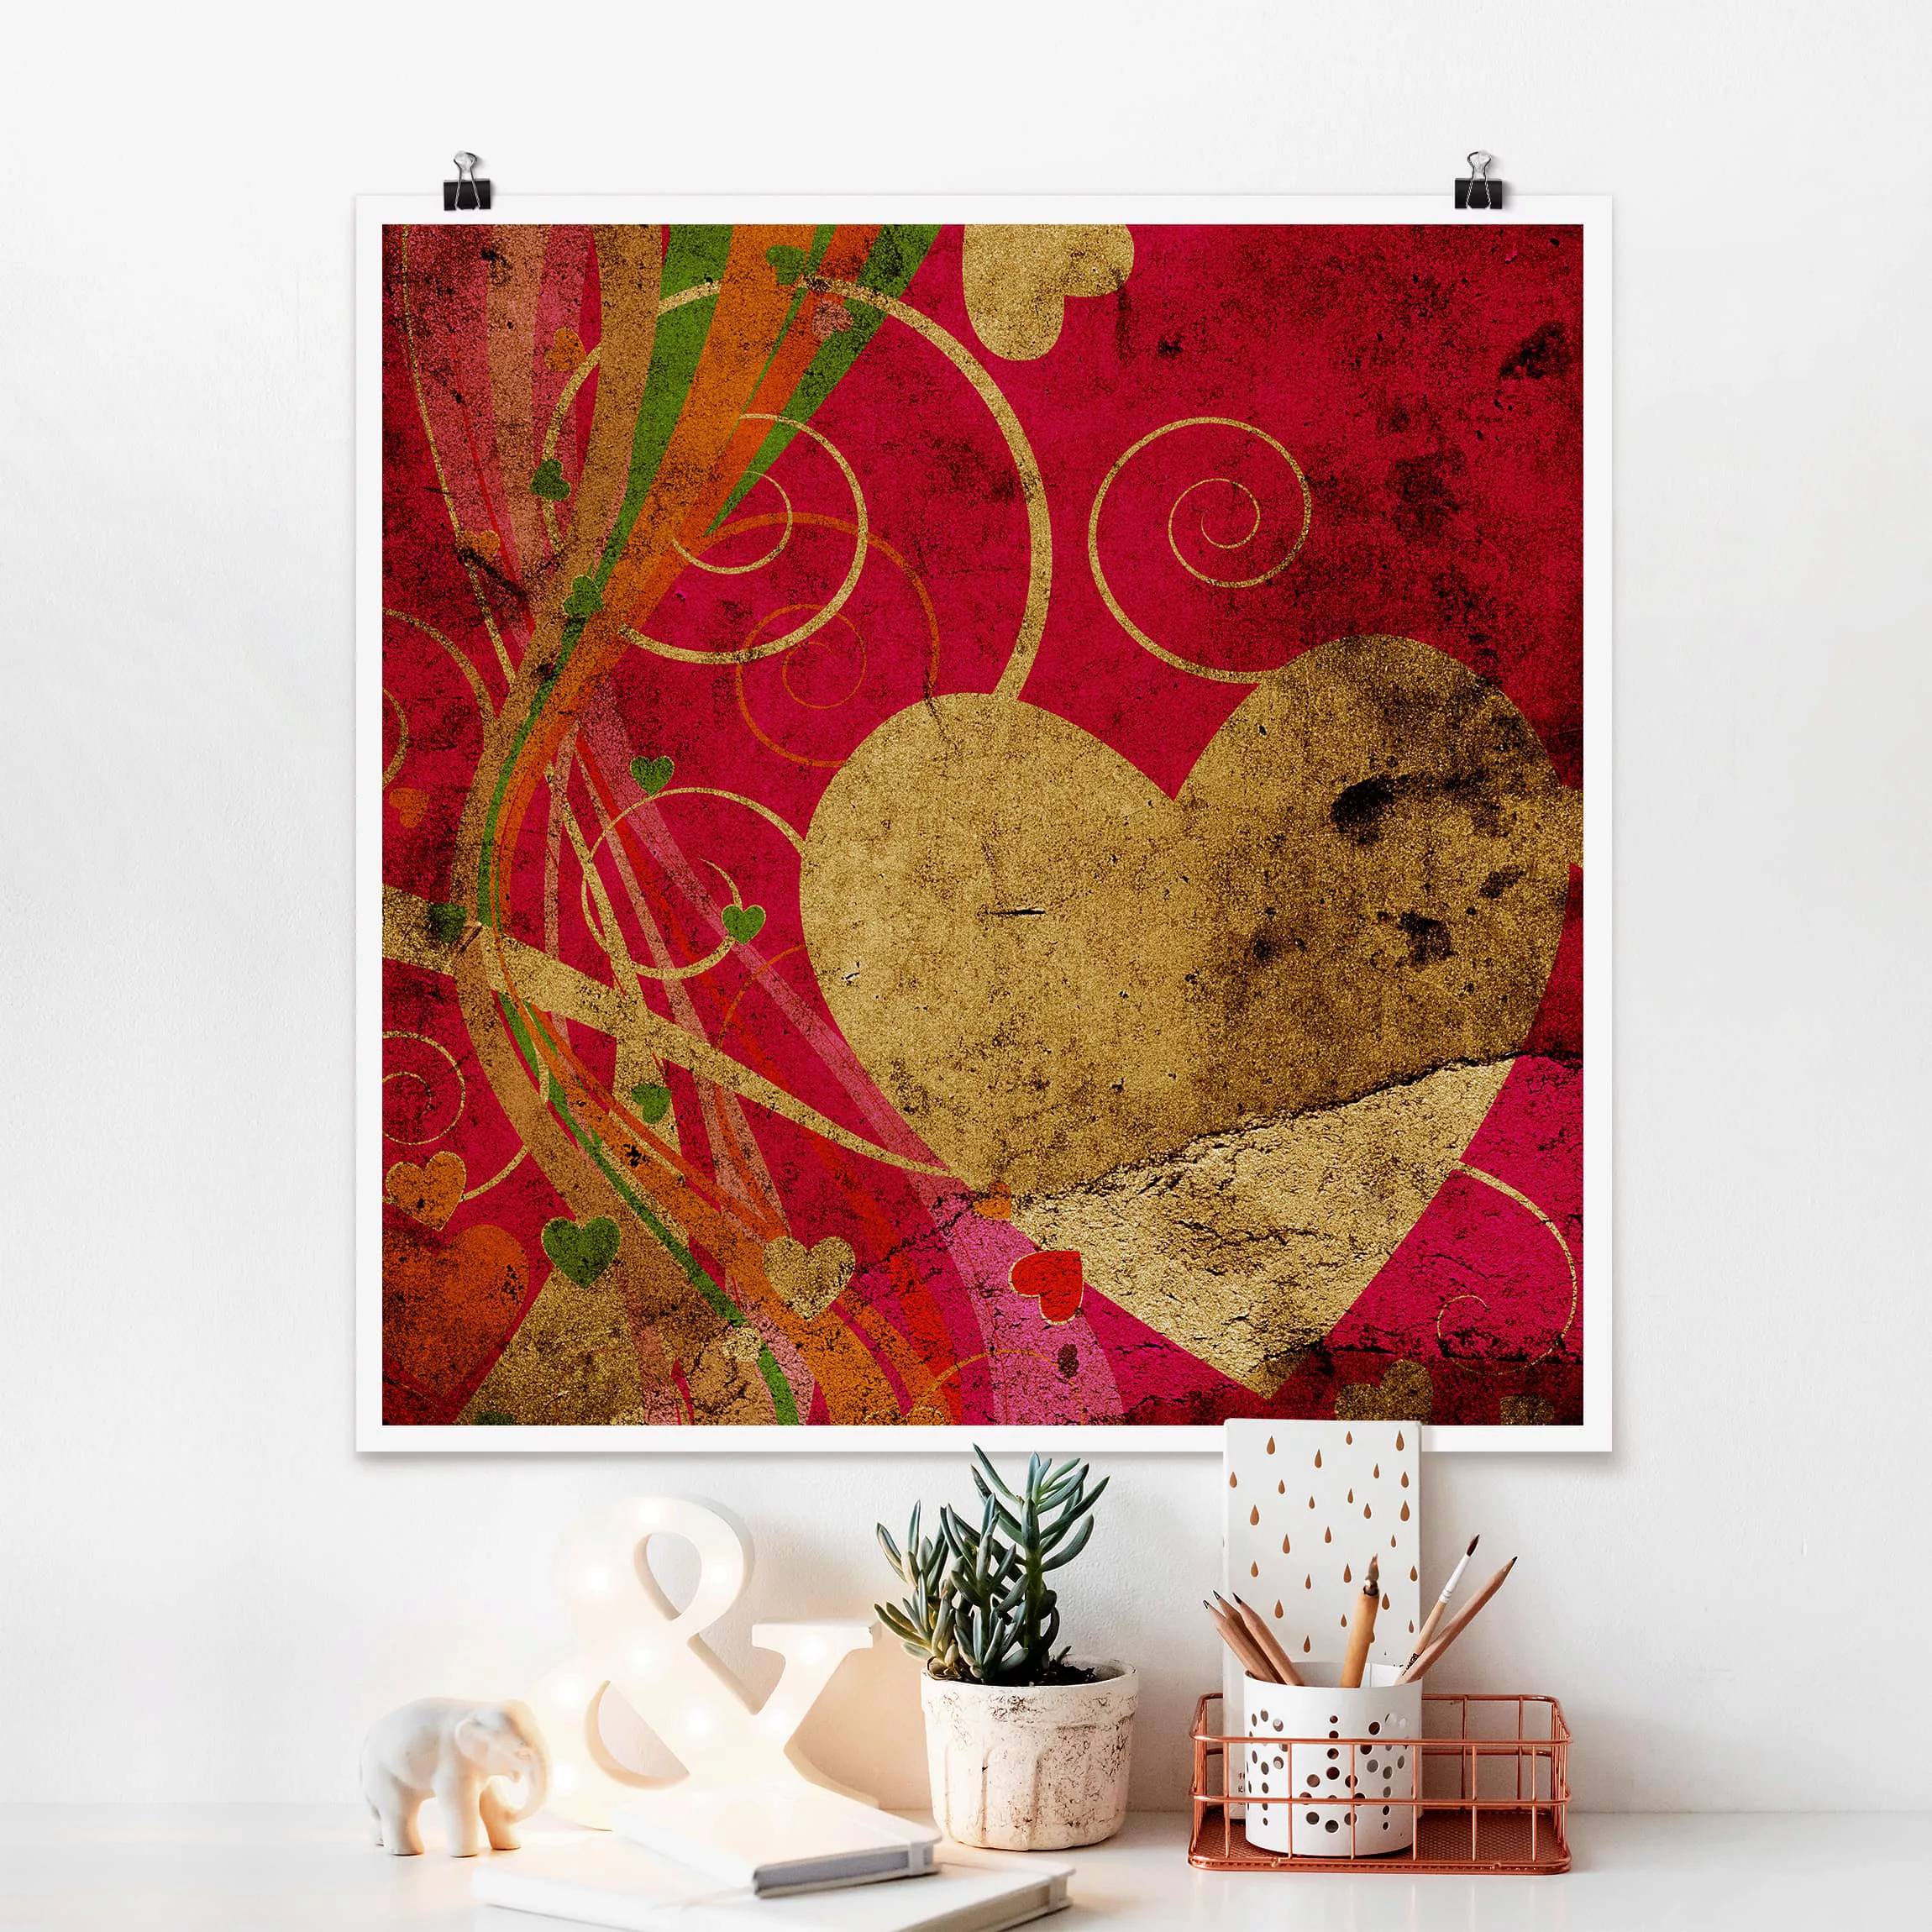 Poster Muster & Texturen - Quadrat Lava Love günstig online kaufen